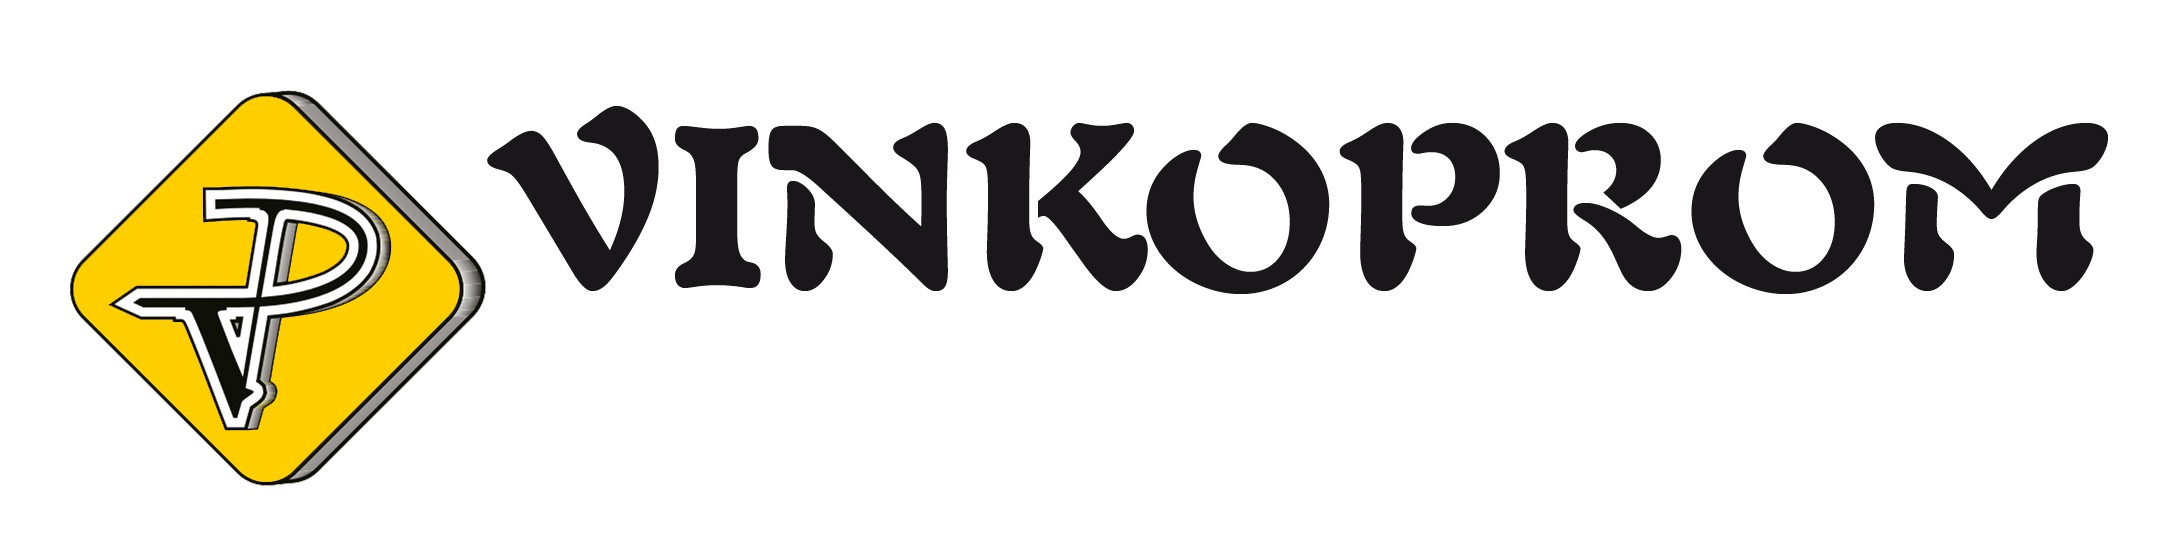 vinkoprom-logo3518803.jpg